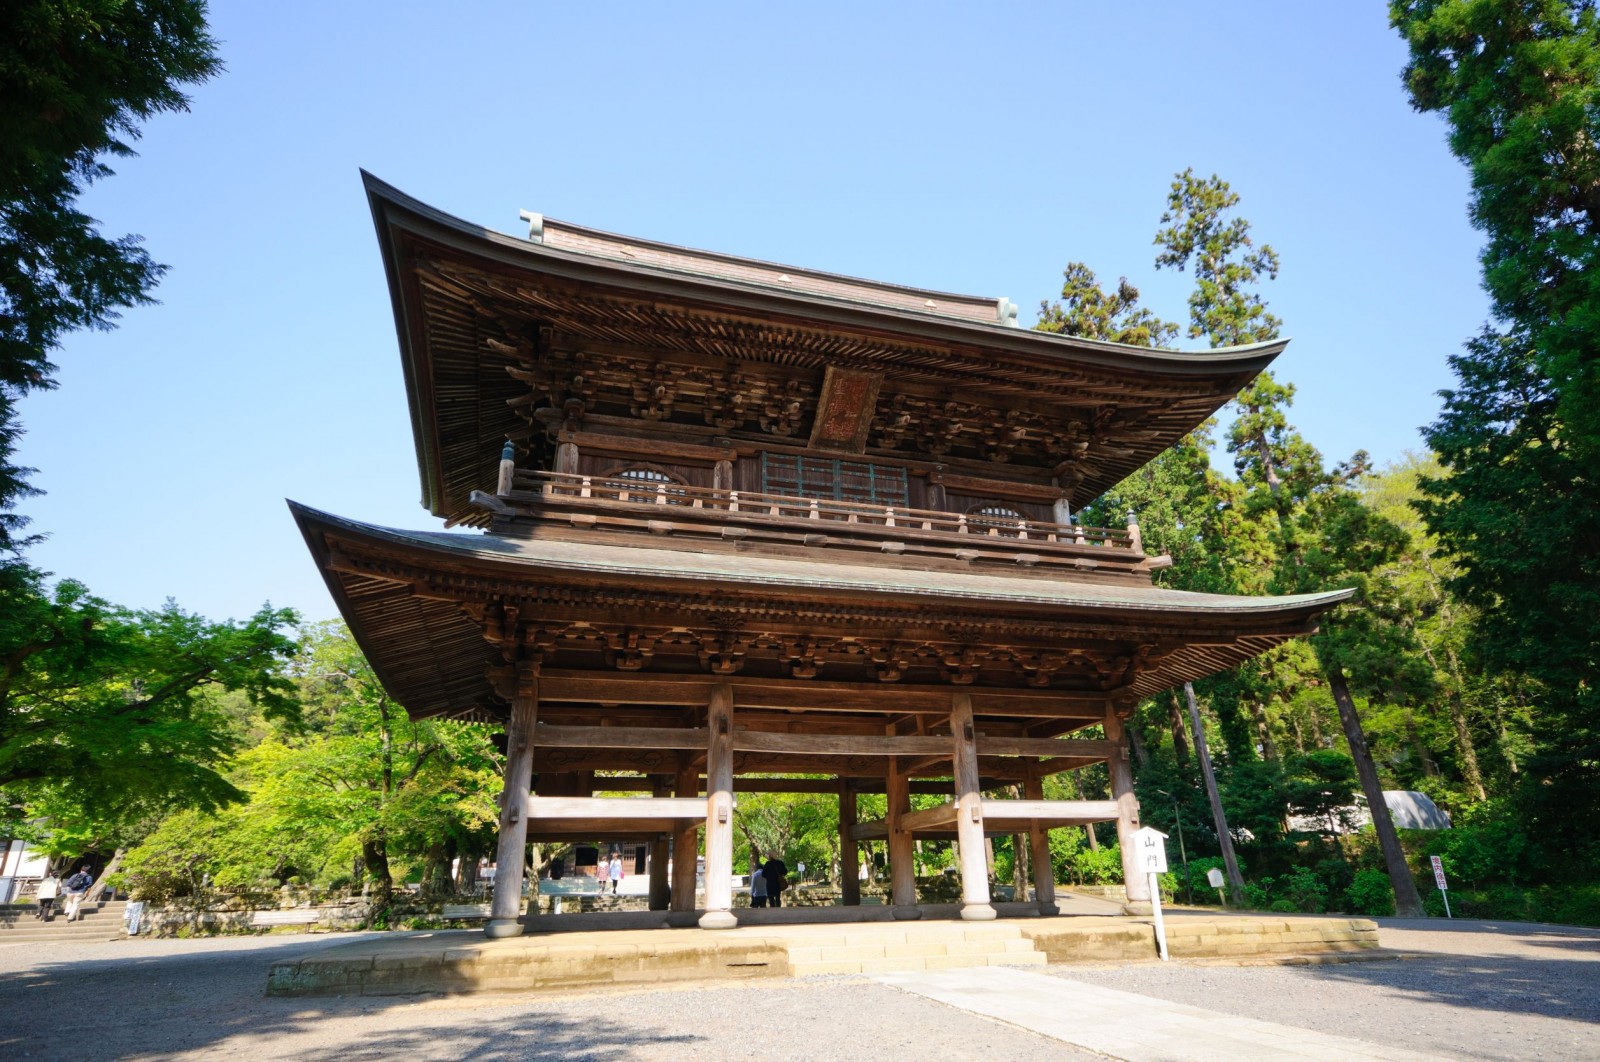 engaku-ji-temple-in-kamakura-japan-1600x1062